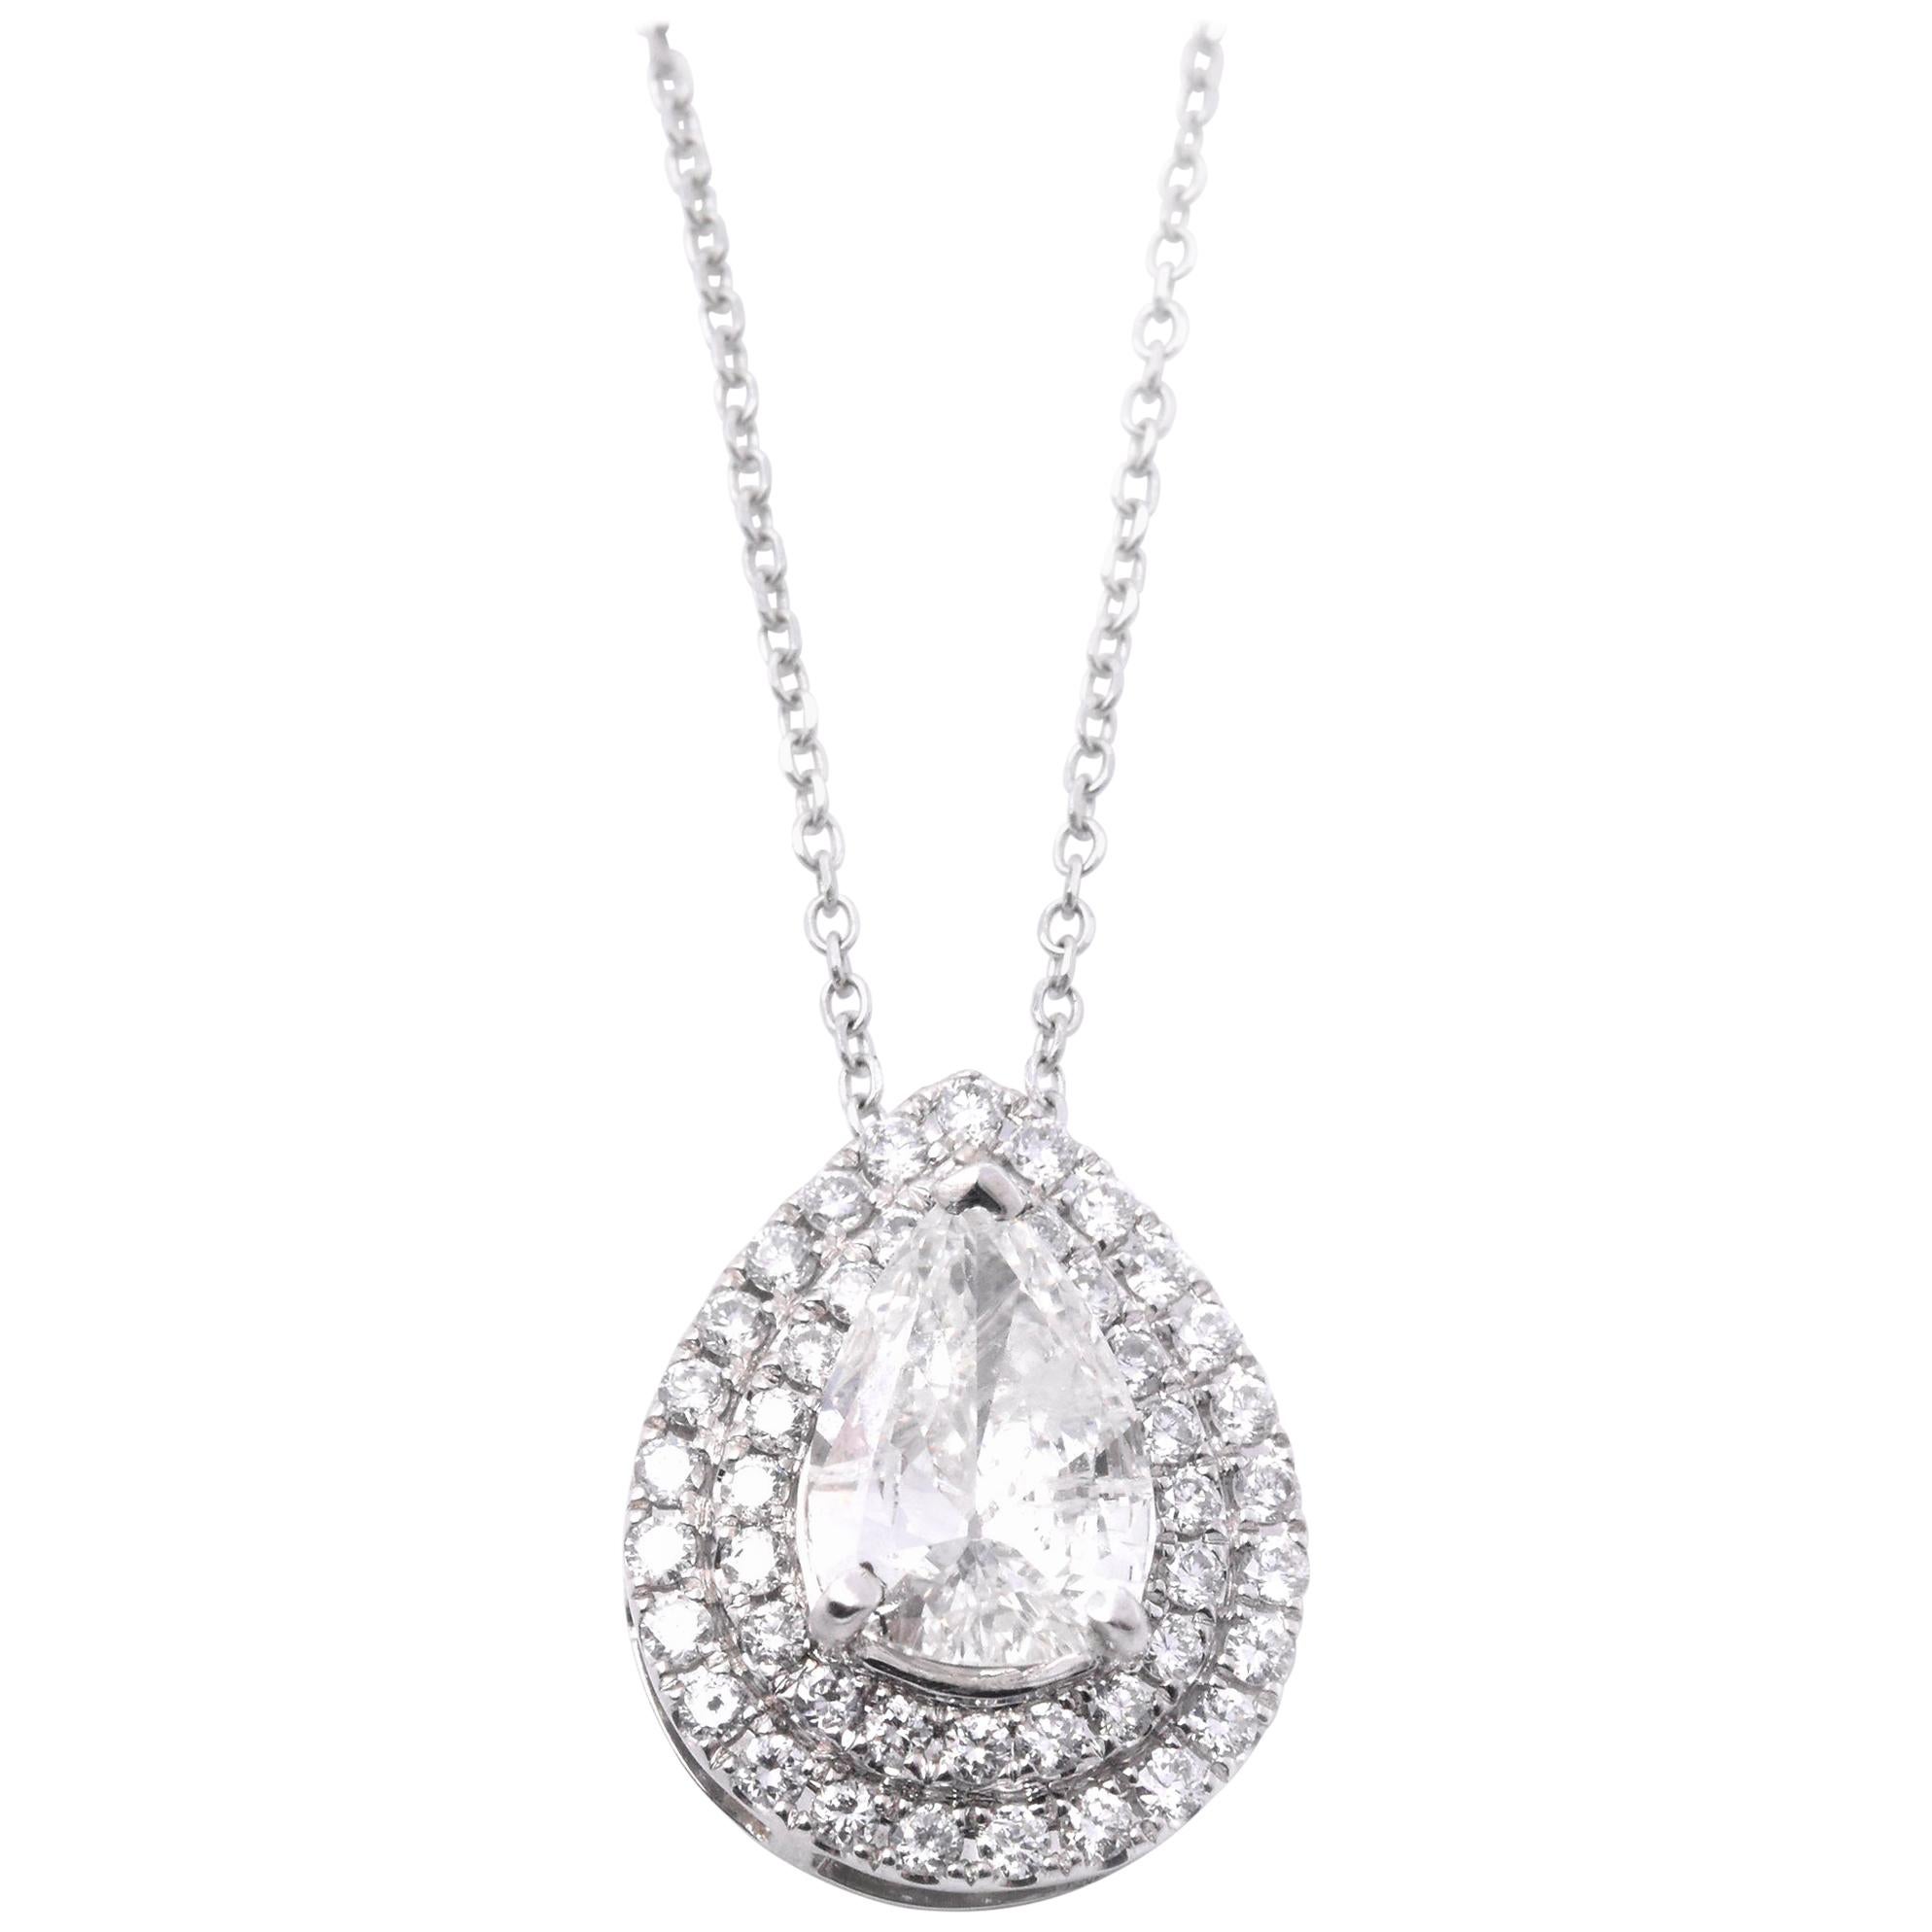 14 Karat White Gold Diamond Pear Pendant Necklace